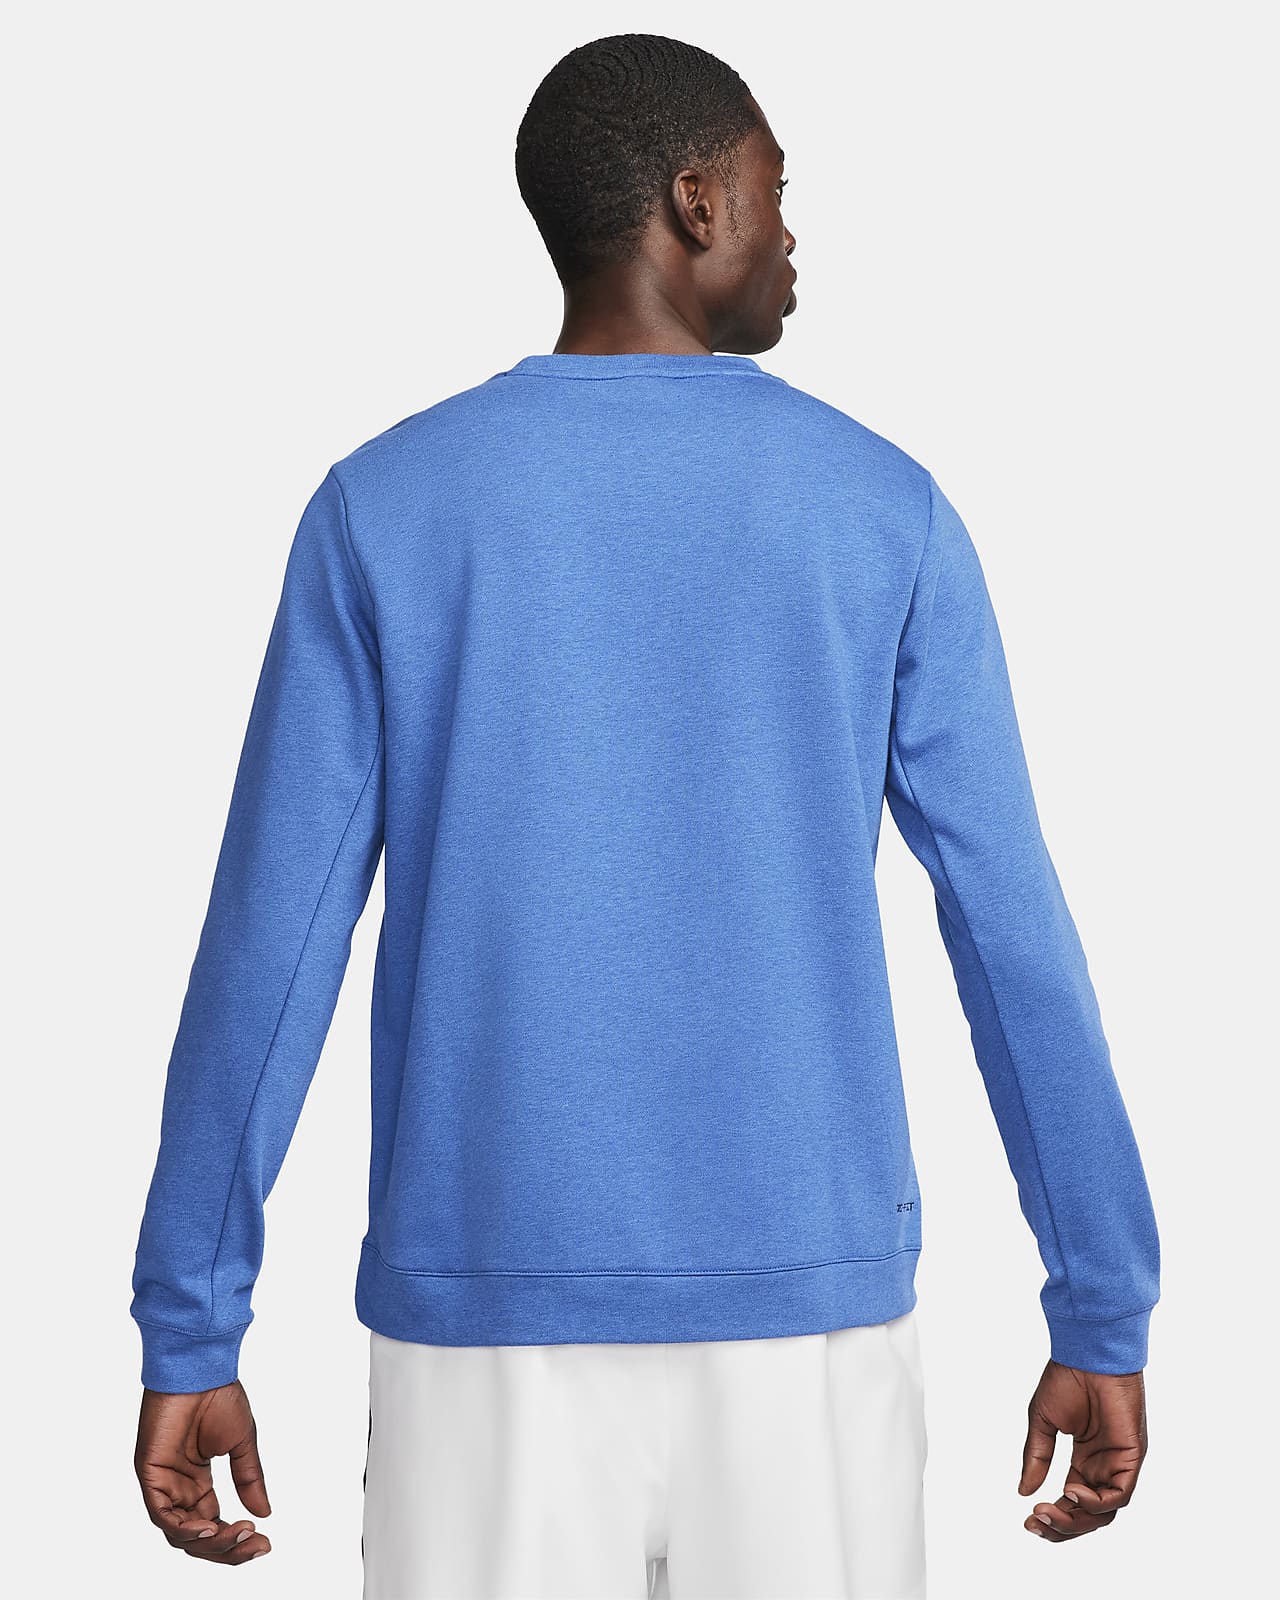 Linea Uomo Sweater Mens Large Blue Cotton Blend Crew Neck Long Sleeve